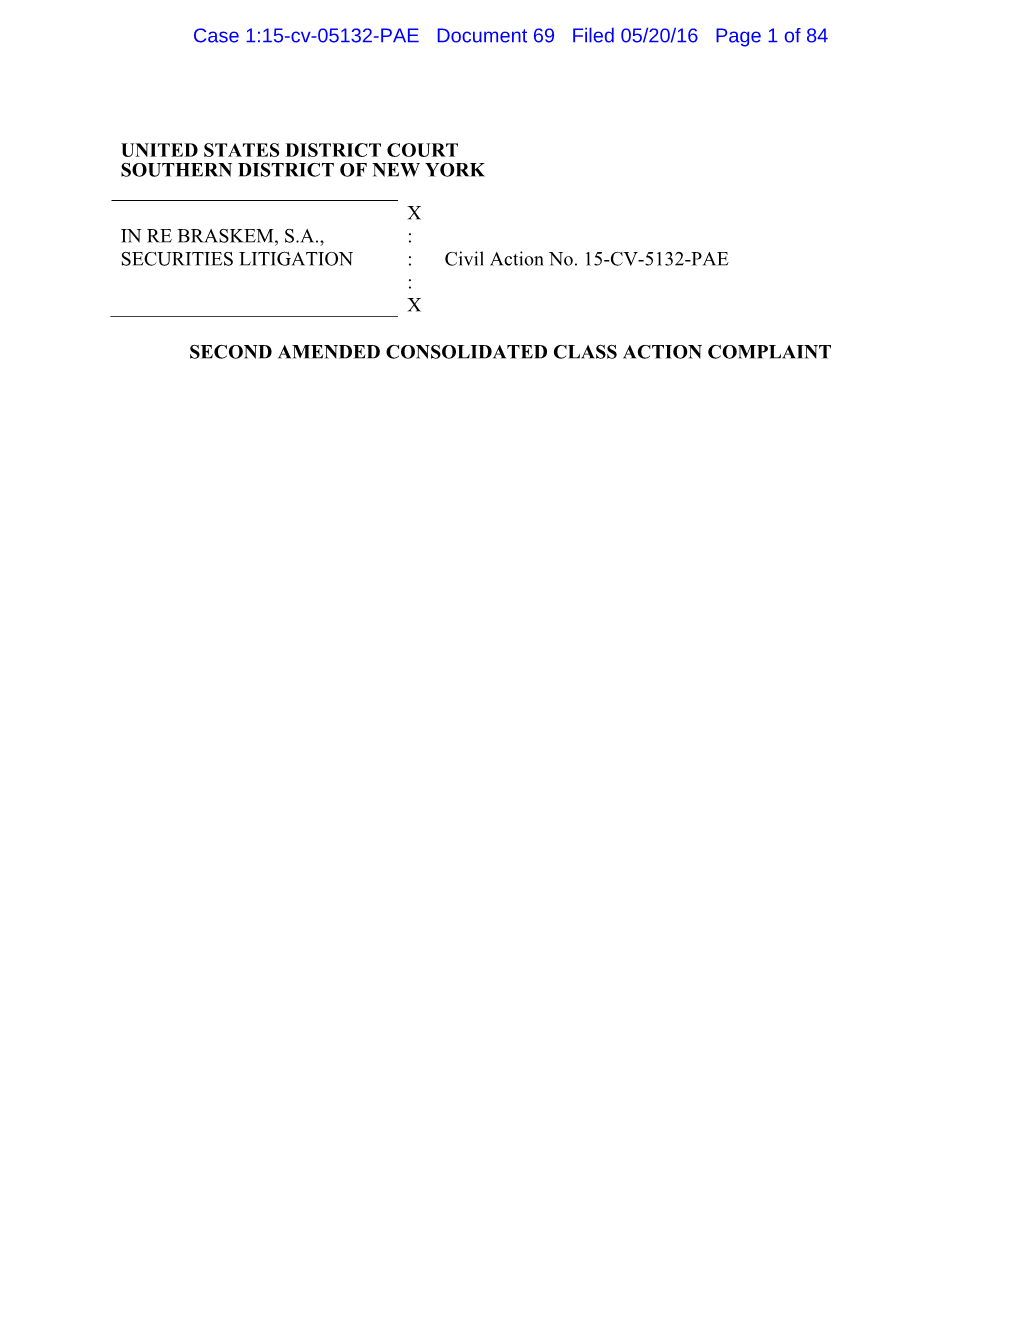 In Re Braskem Securities Litigation 15-CV-05132-Second Amended